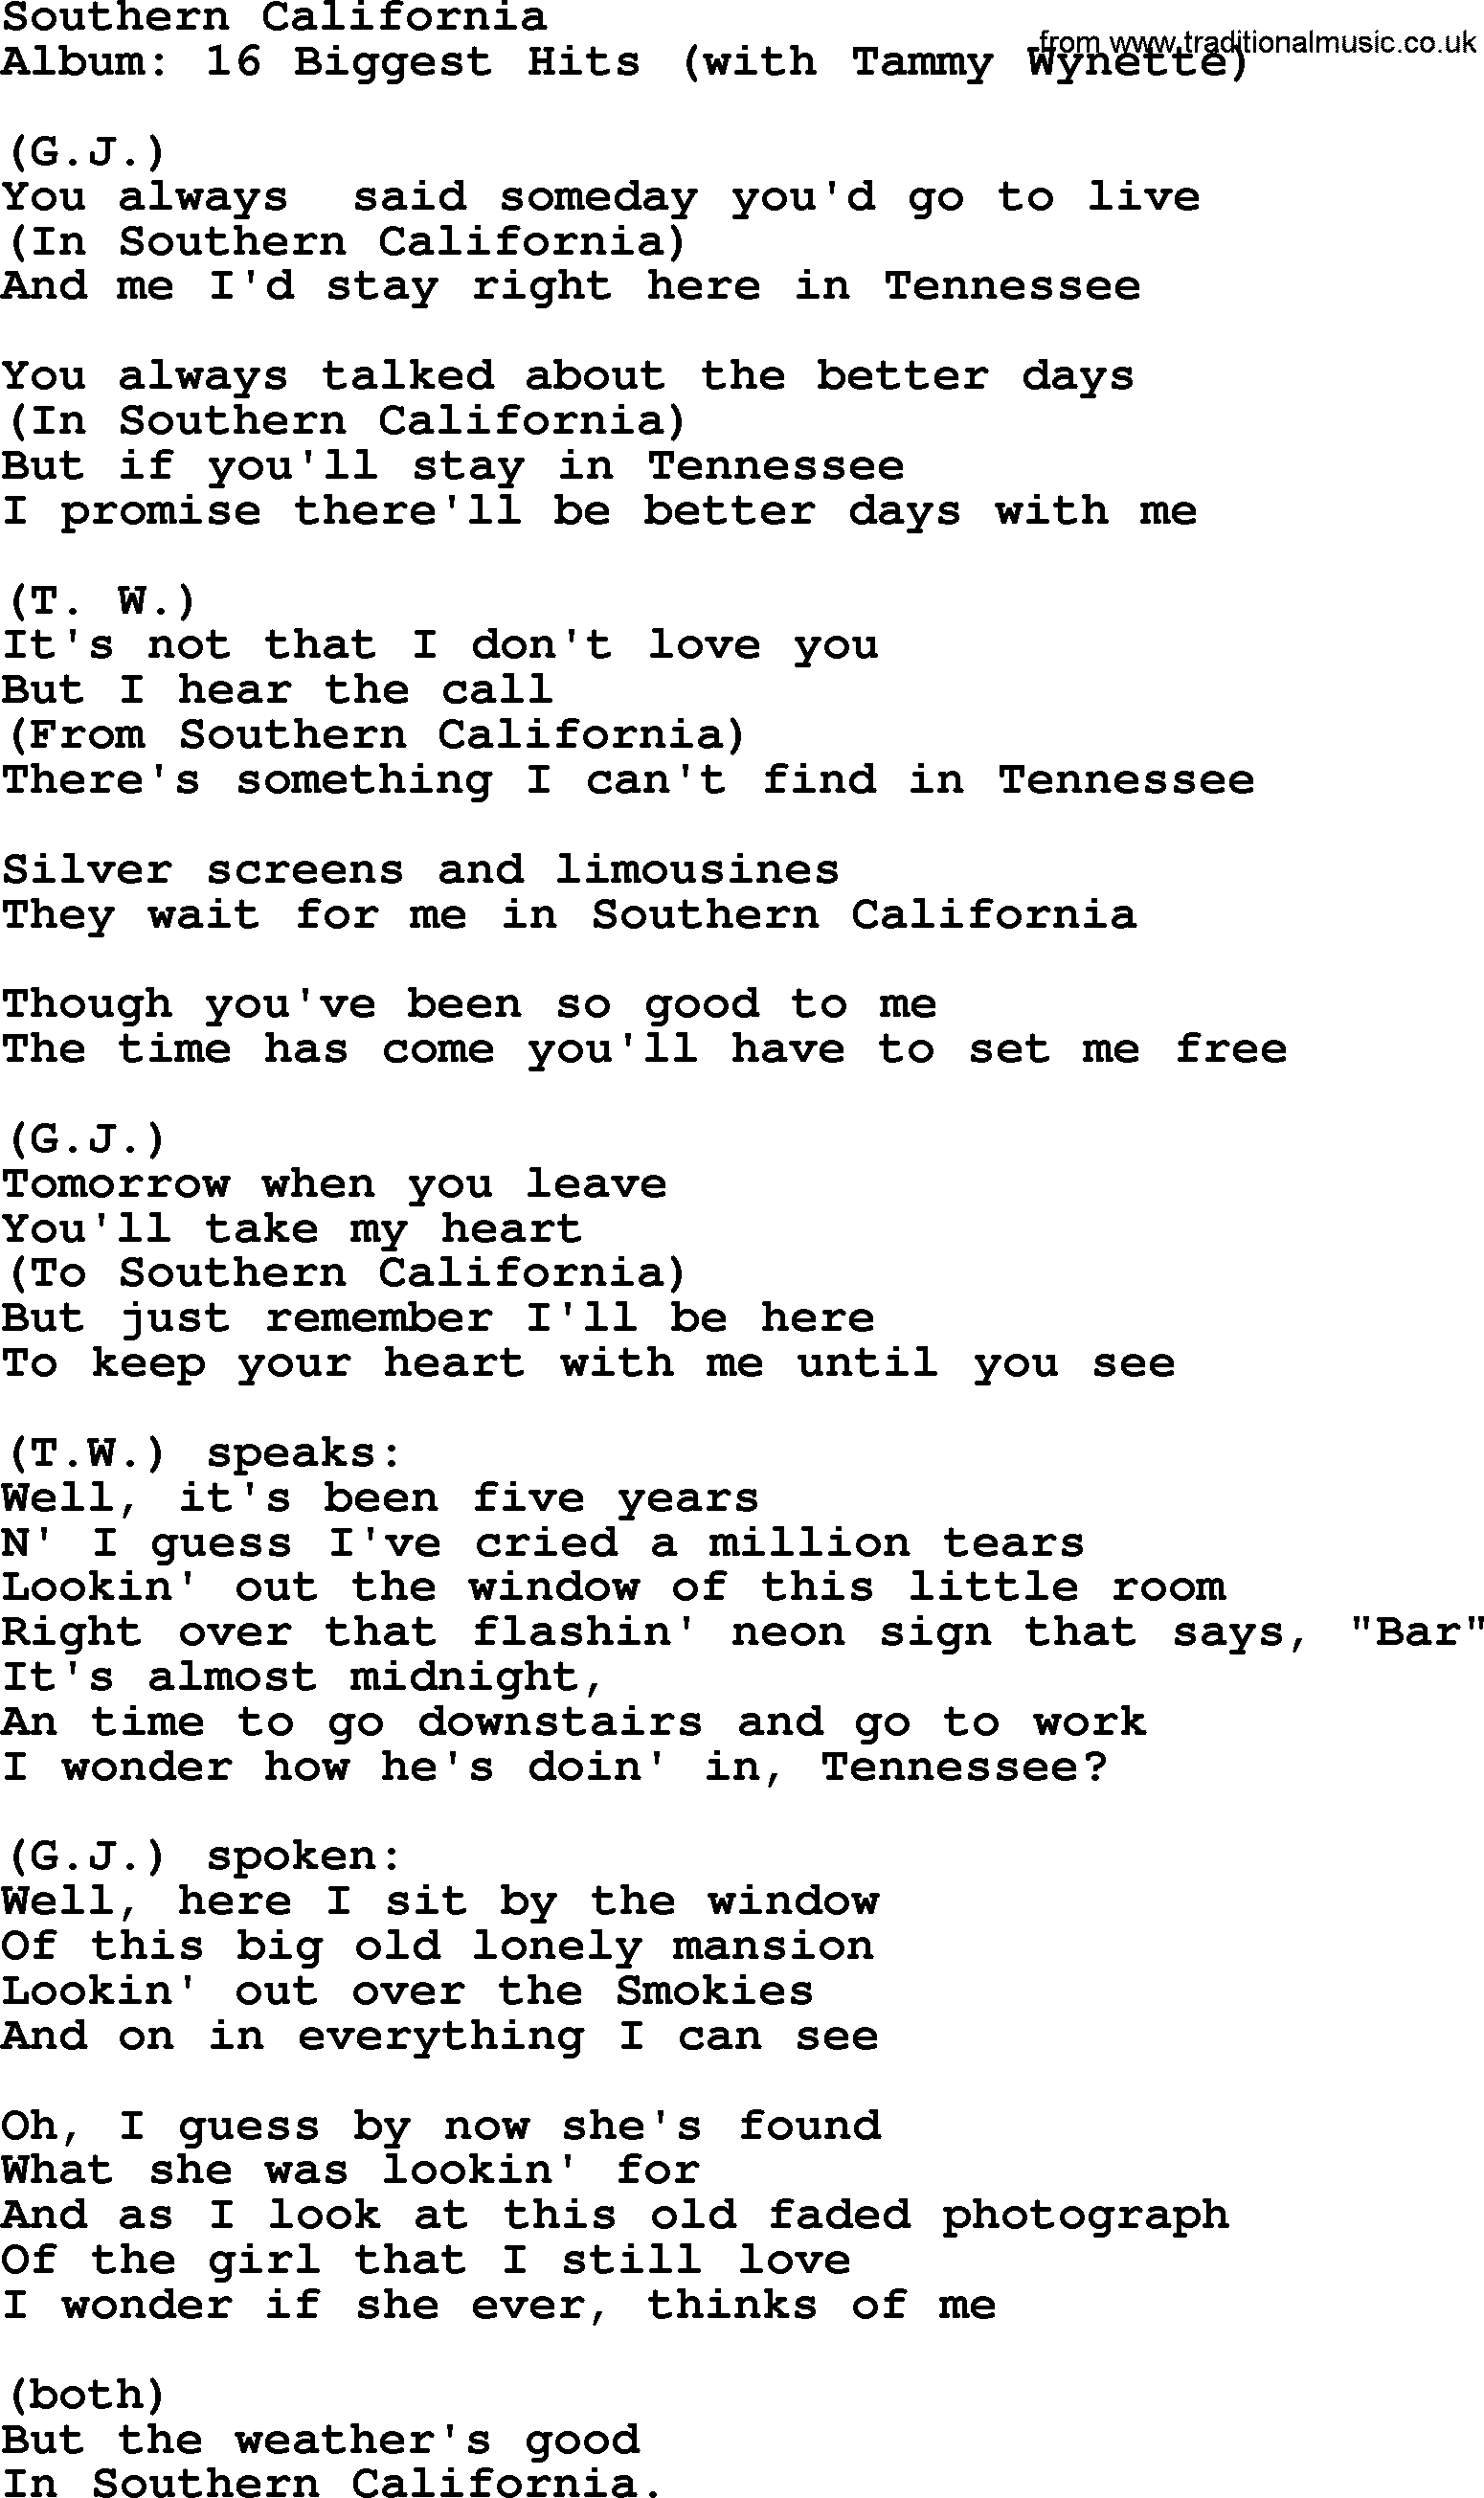 George Jones song: Southern California, lyrics